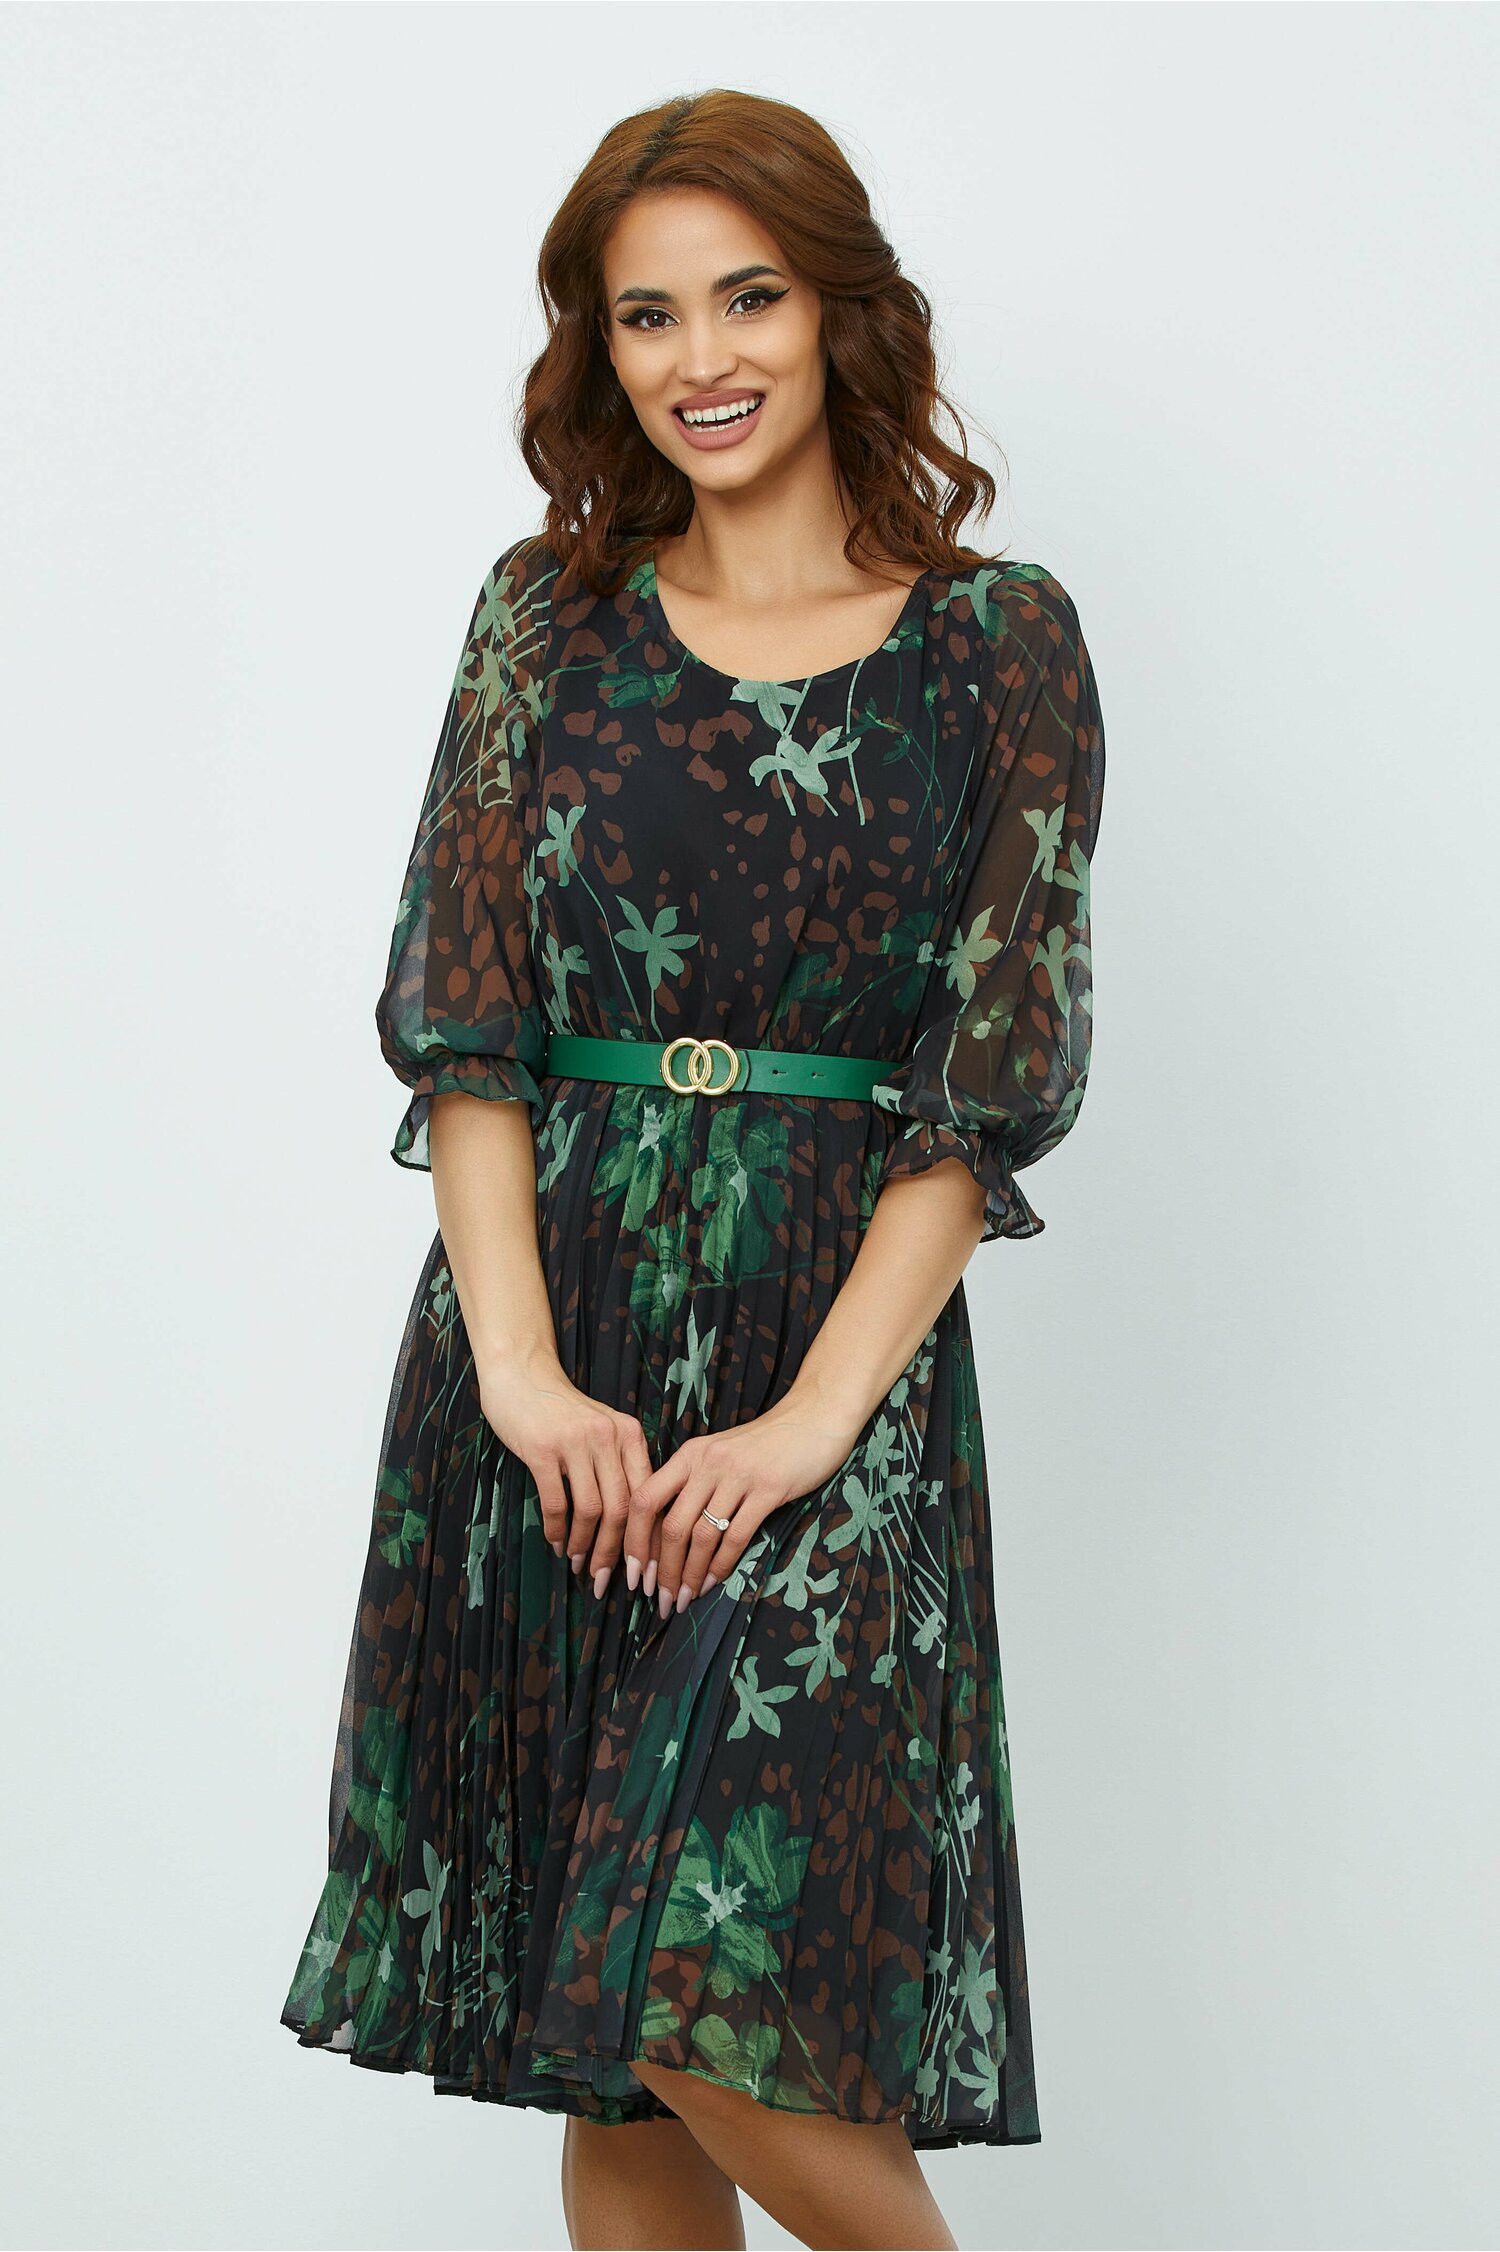 Rochie Ana neagra cu imprimeu verde-maro si fusta plisata dyfashion.ro